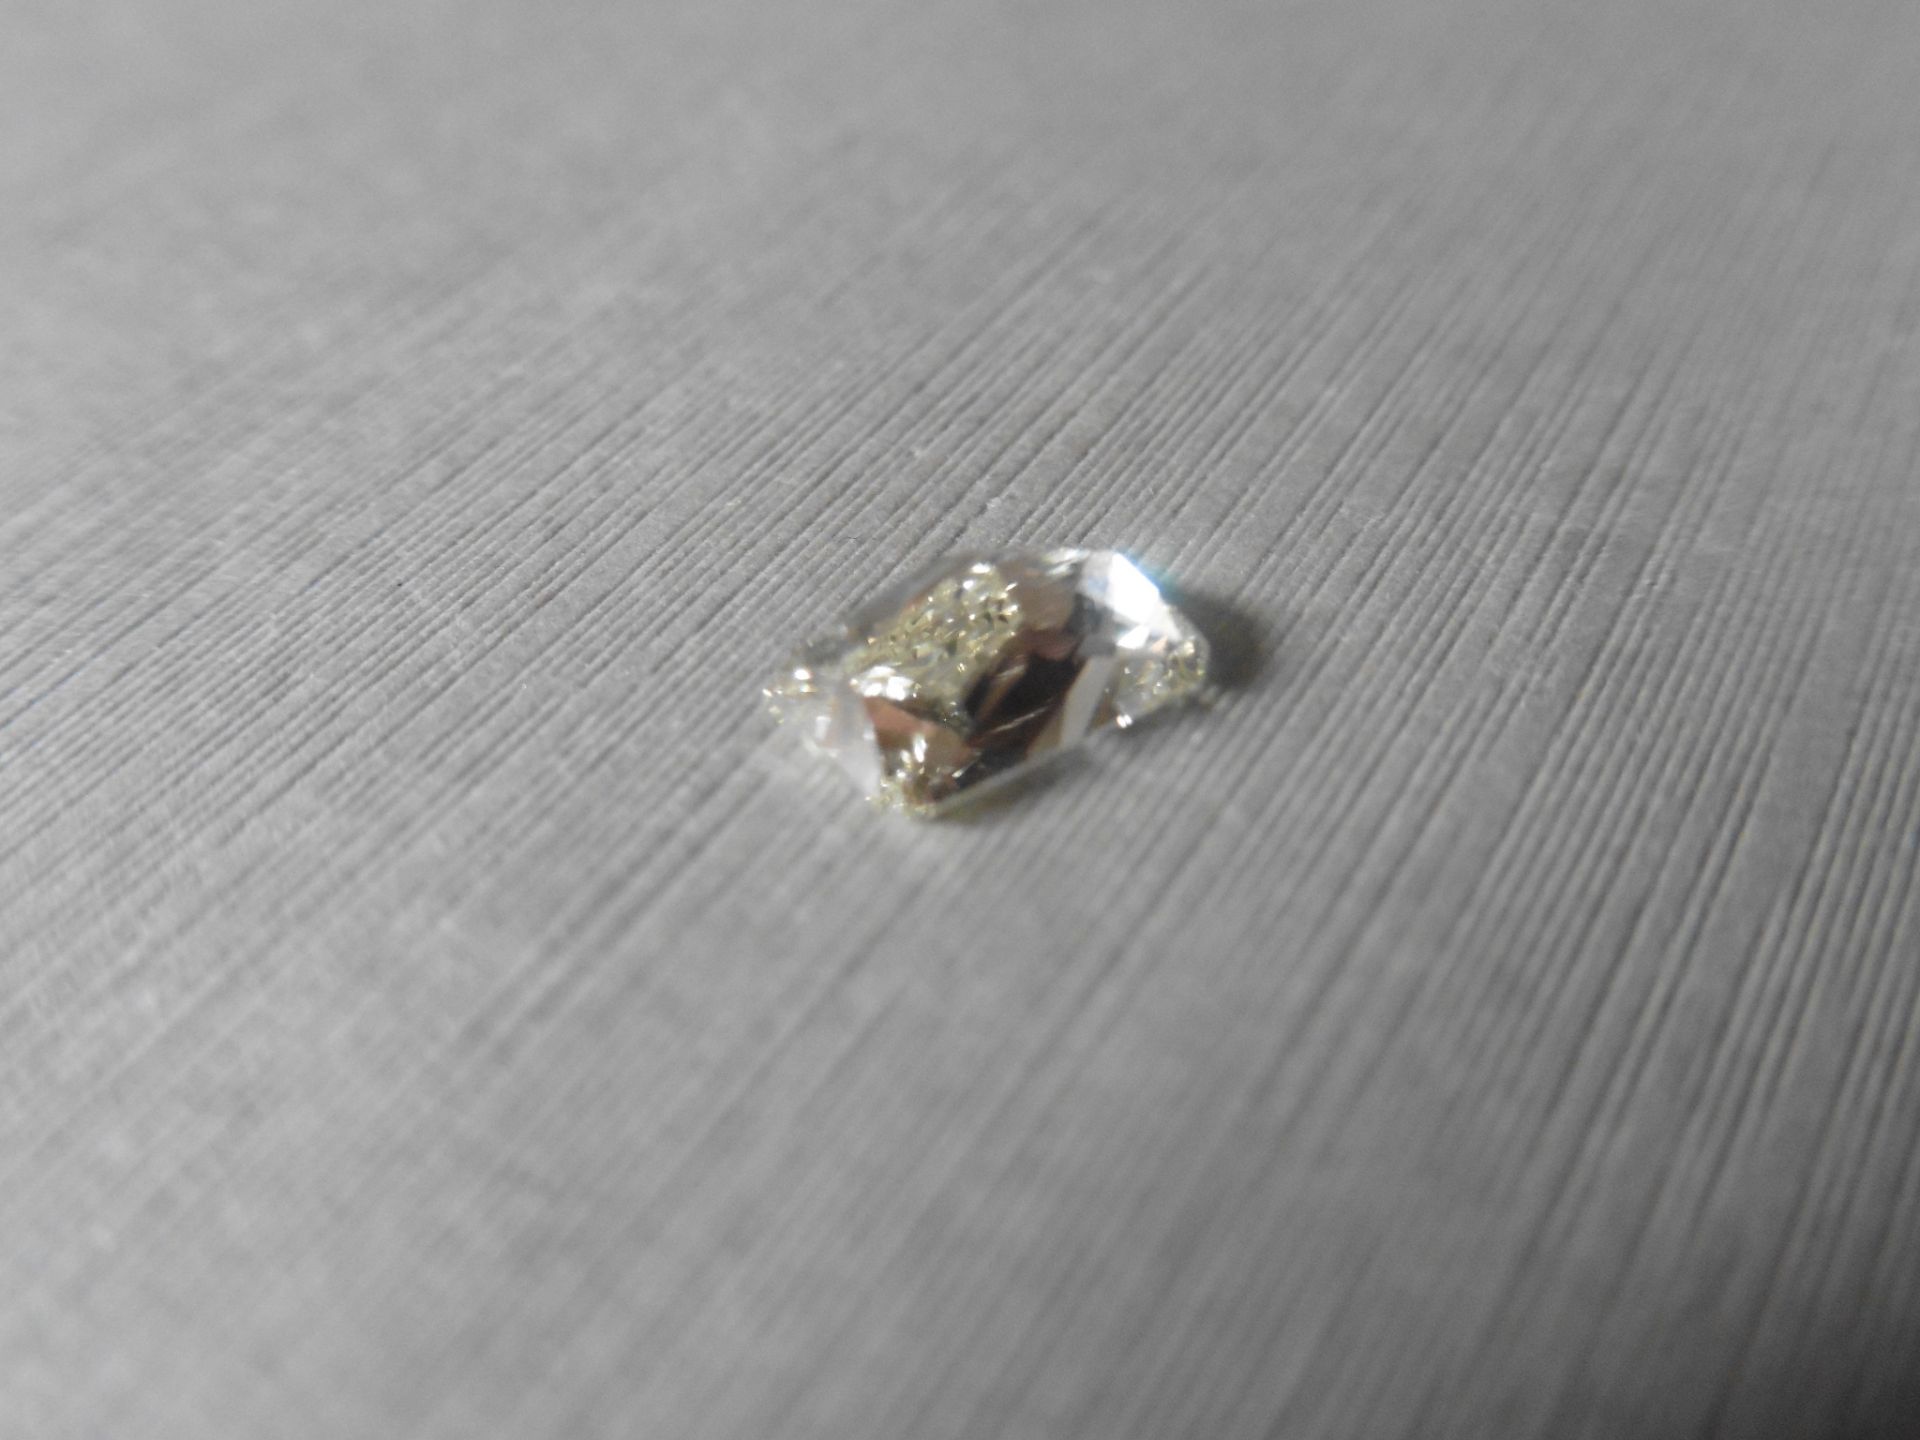 1.19ct loose radiant cut diamond. K colour, VVS2 clarity. 7.74 x 5.36 x 3.25mm. - Image 2 of 4